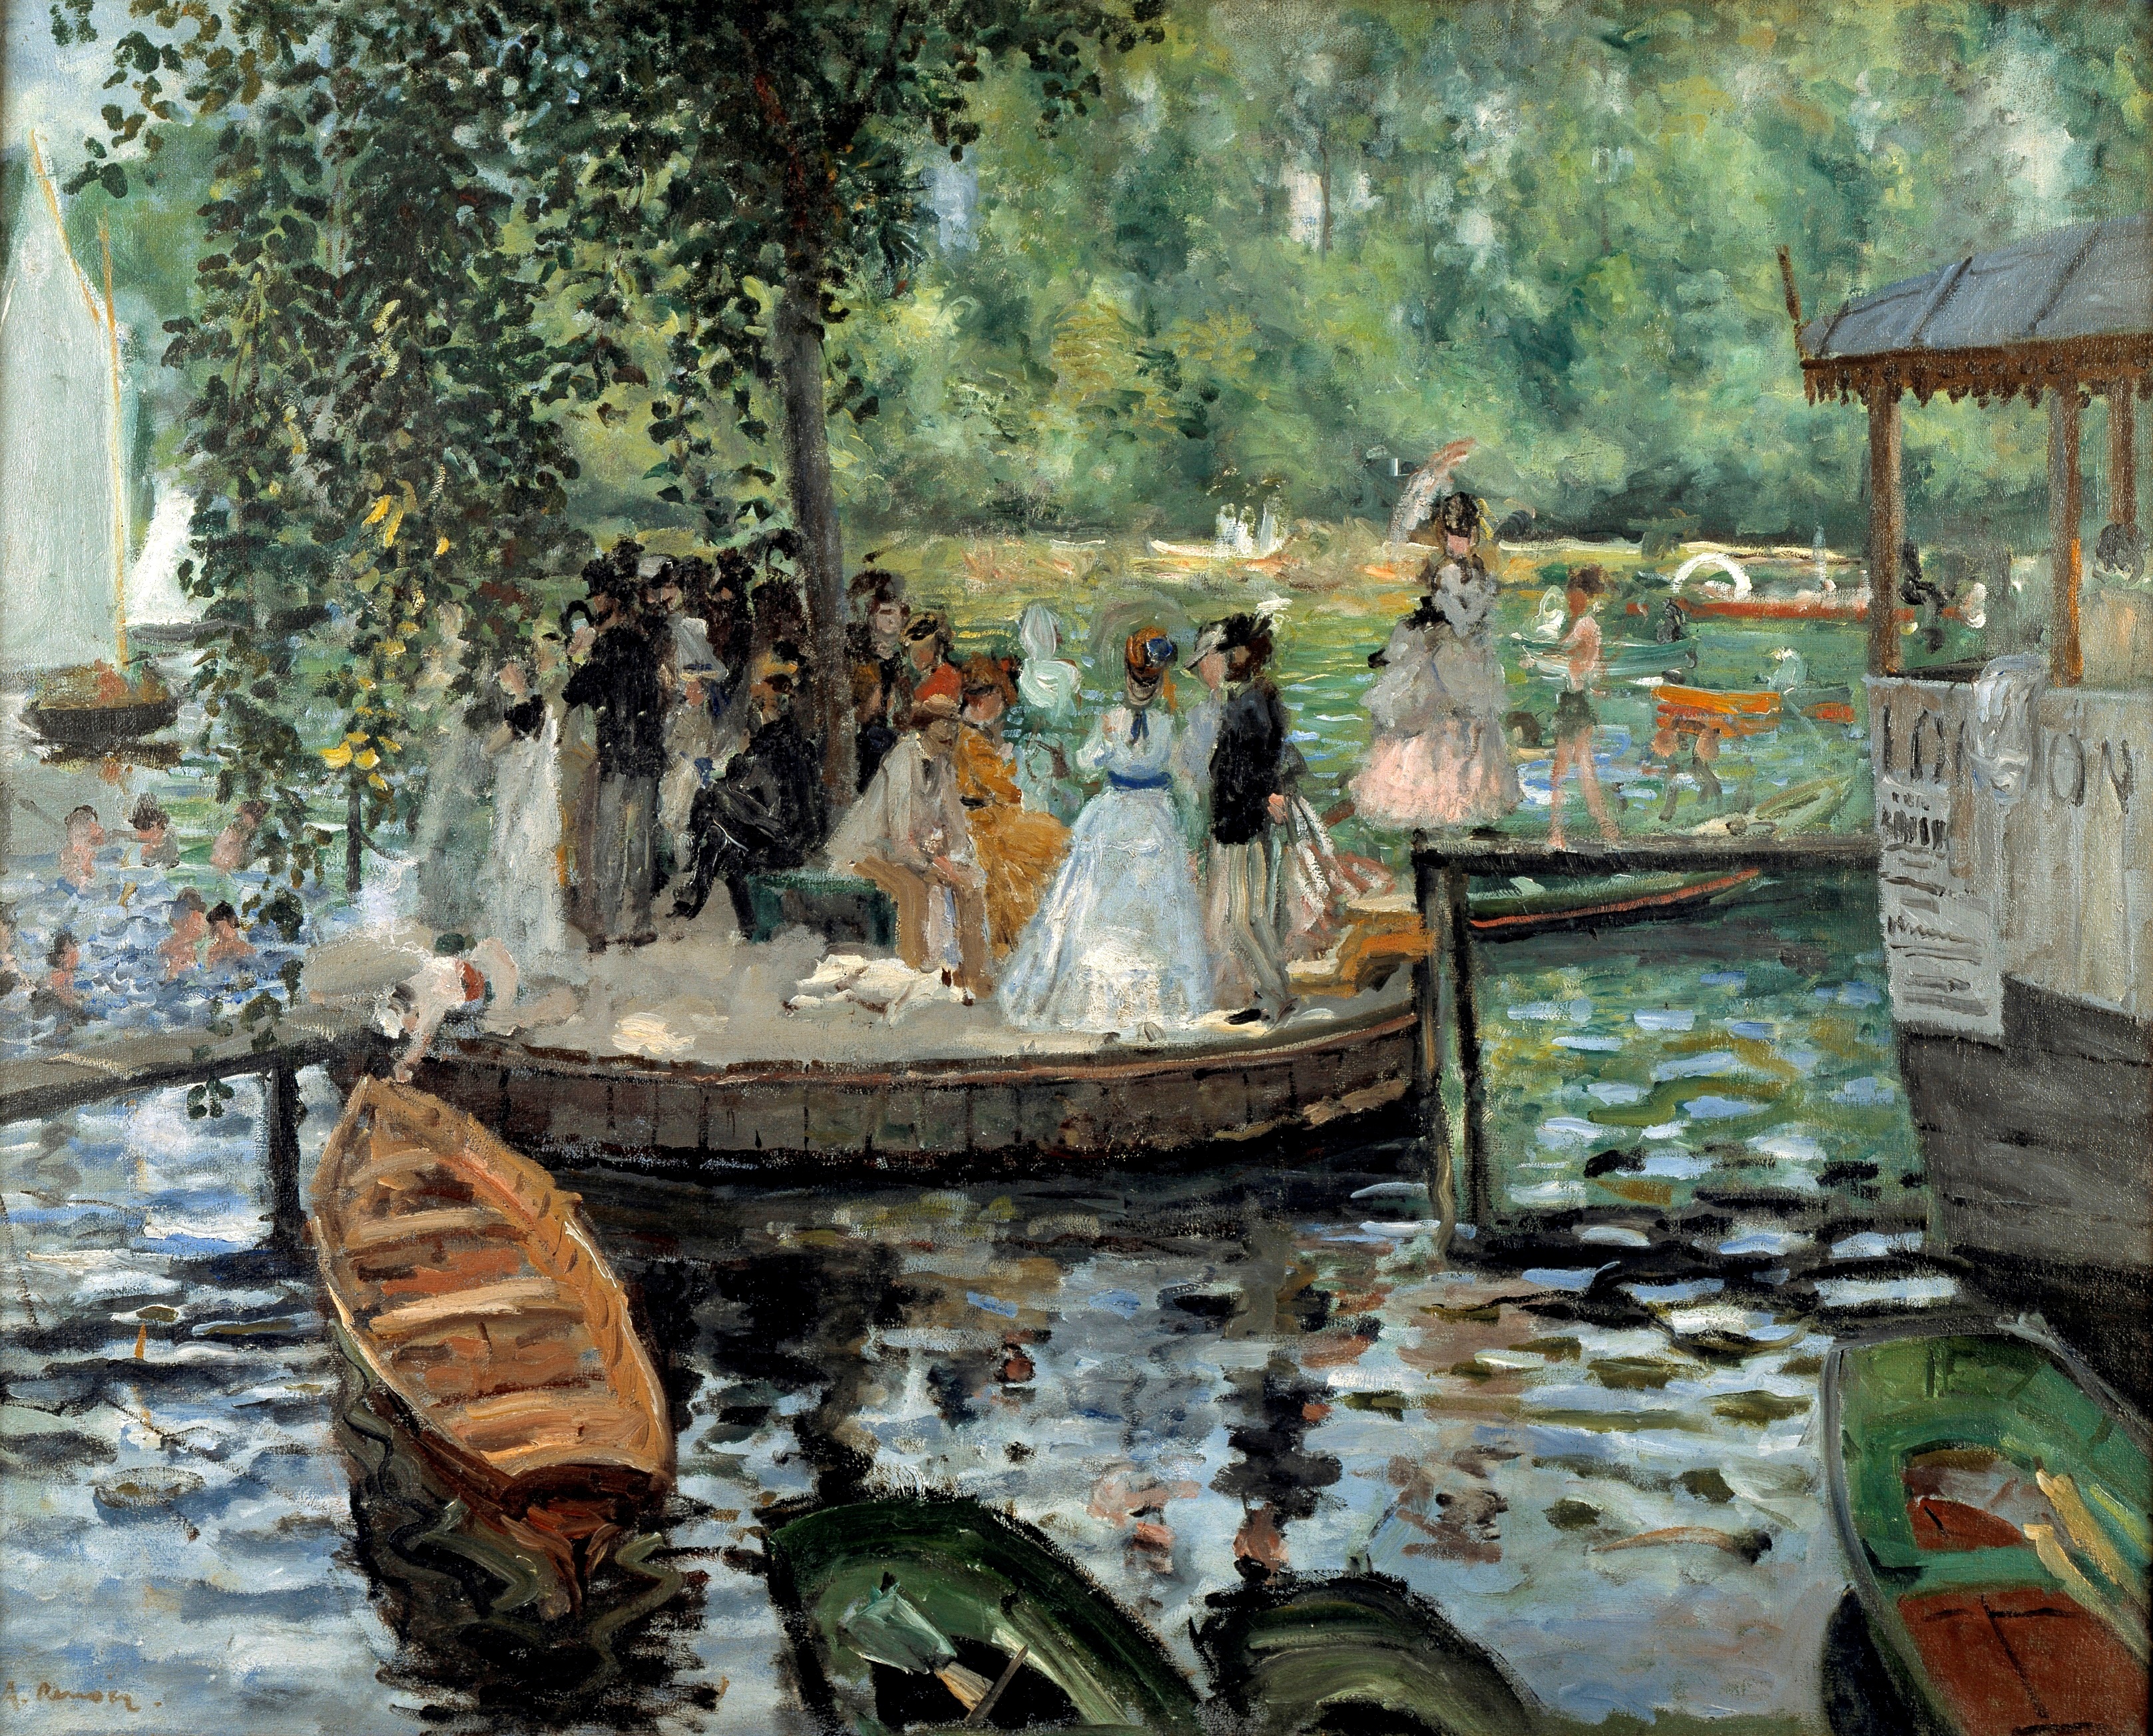 La Grenouillère by Pierre-Auguste Renoir - 1869 - 81.1 x 66.5 cm Nationalmuseum